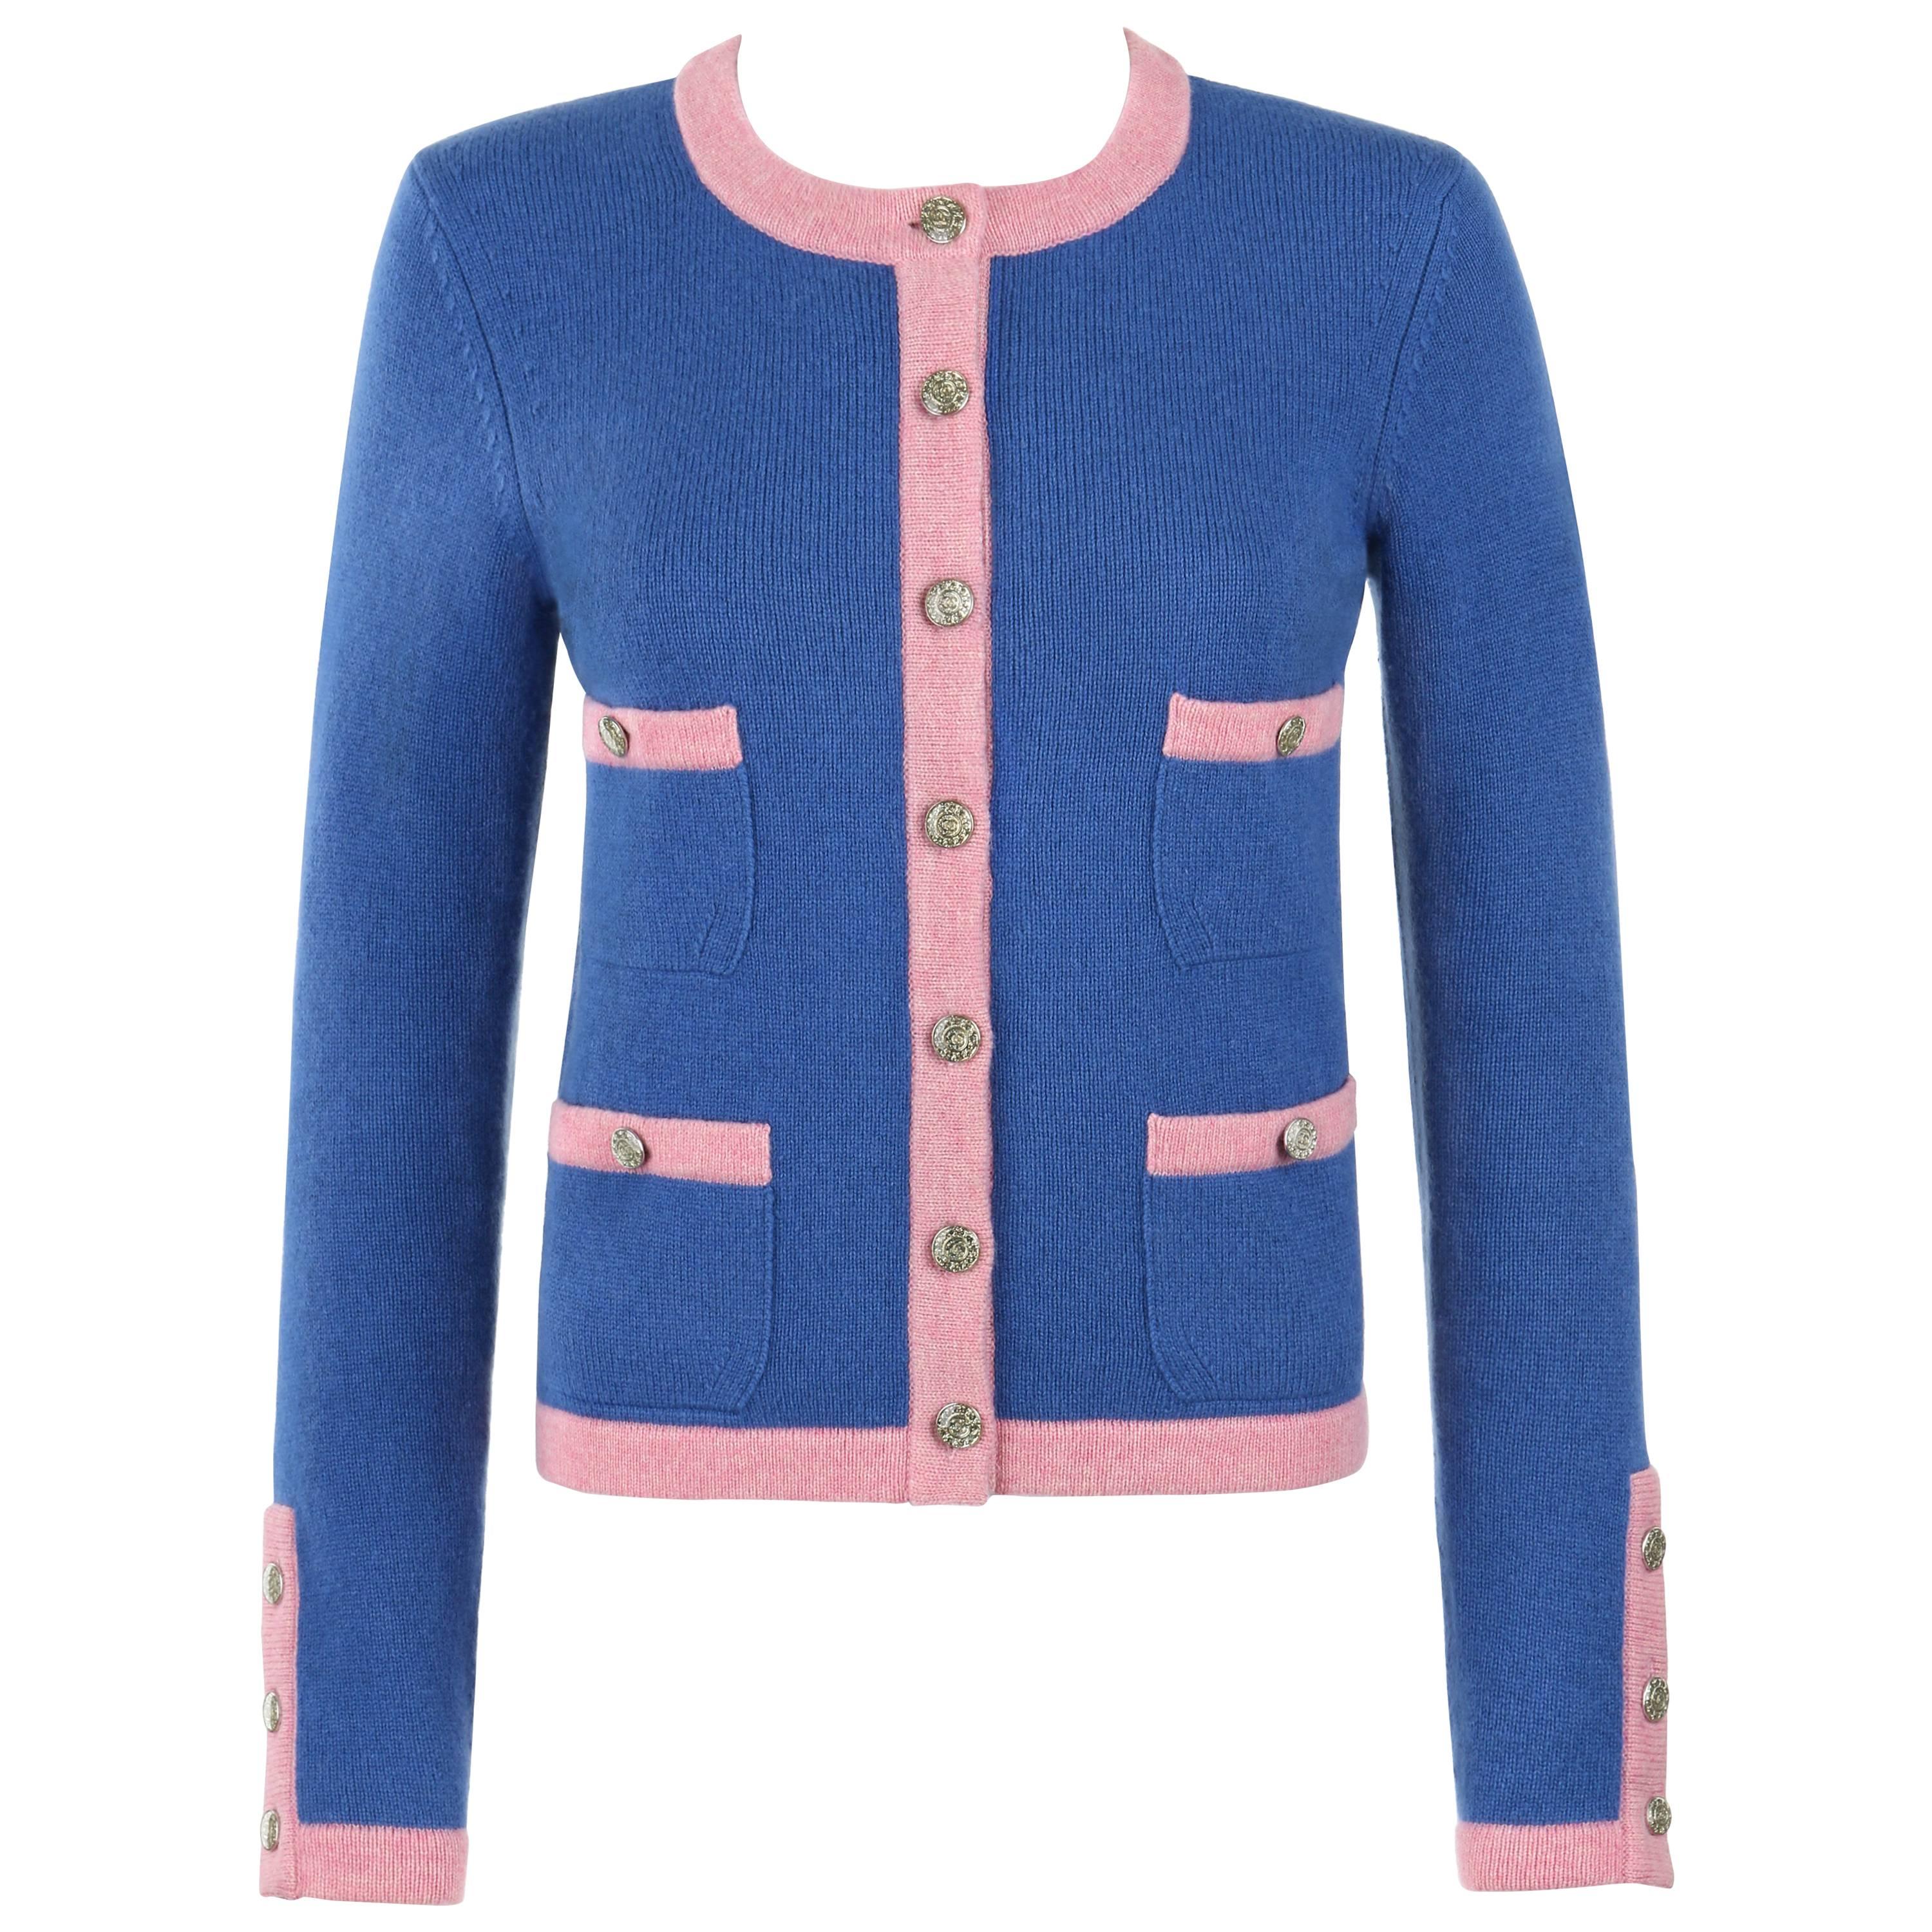 CHANEL S/S 2013 True Blue & Pink Four Pocket Cashmere Bi-color Classic Cardigan 